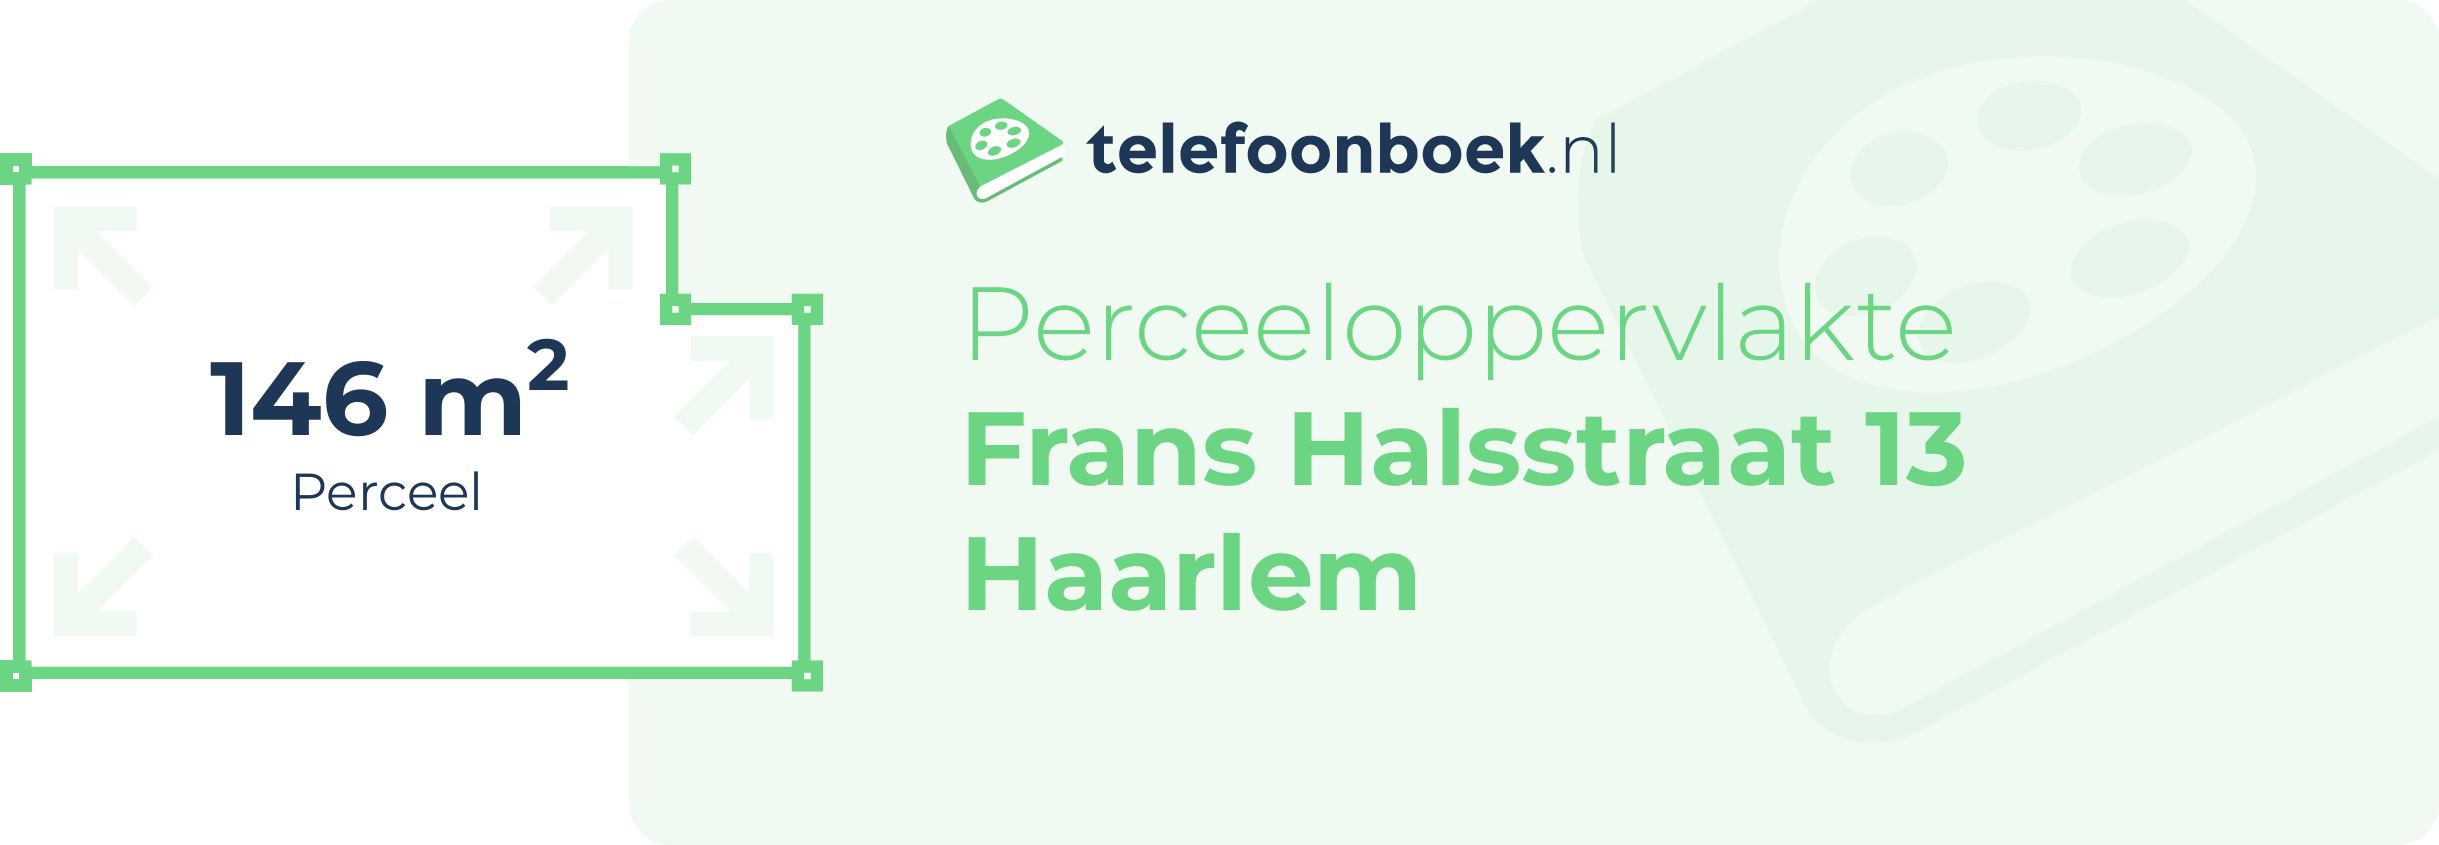 Perceeloppervlakte Frans Halsstraat 13 Haarlem